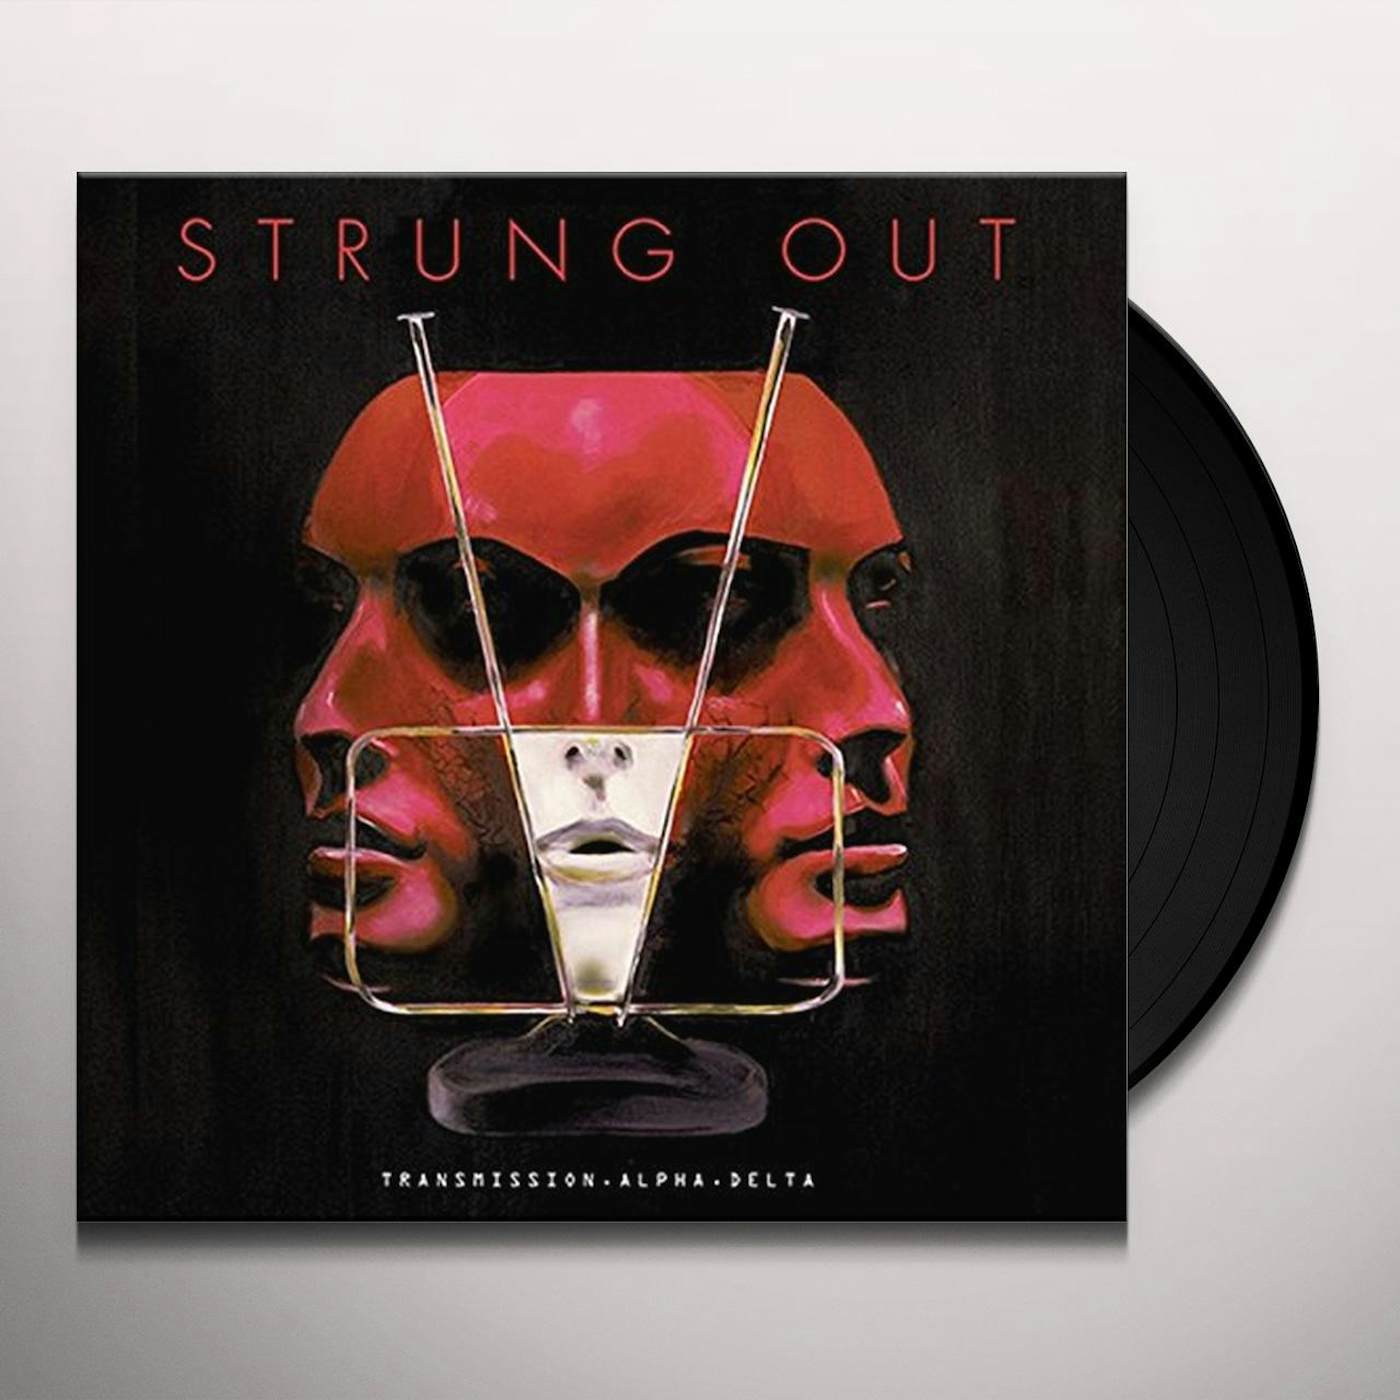 Strung Out Transmission.Alpha.Delta Vinyl Record